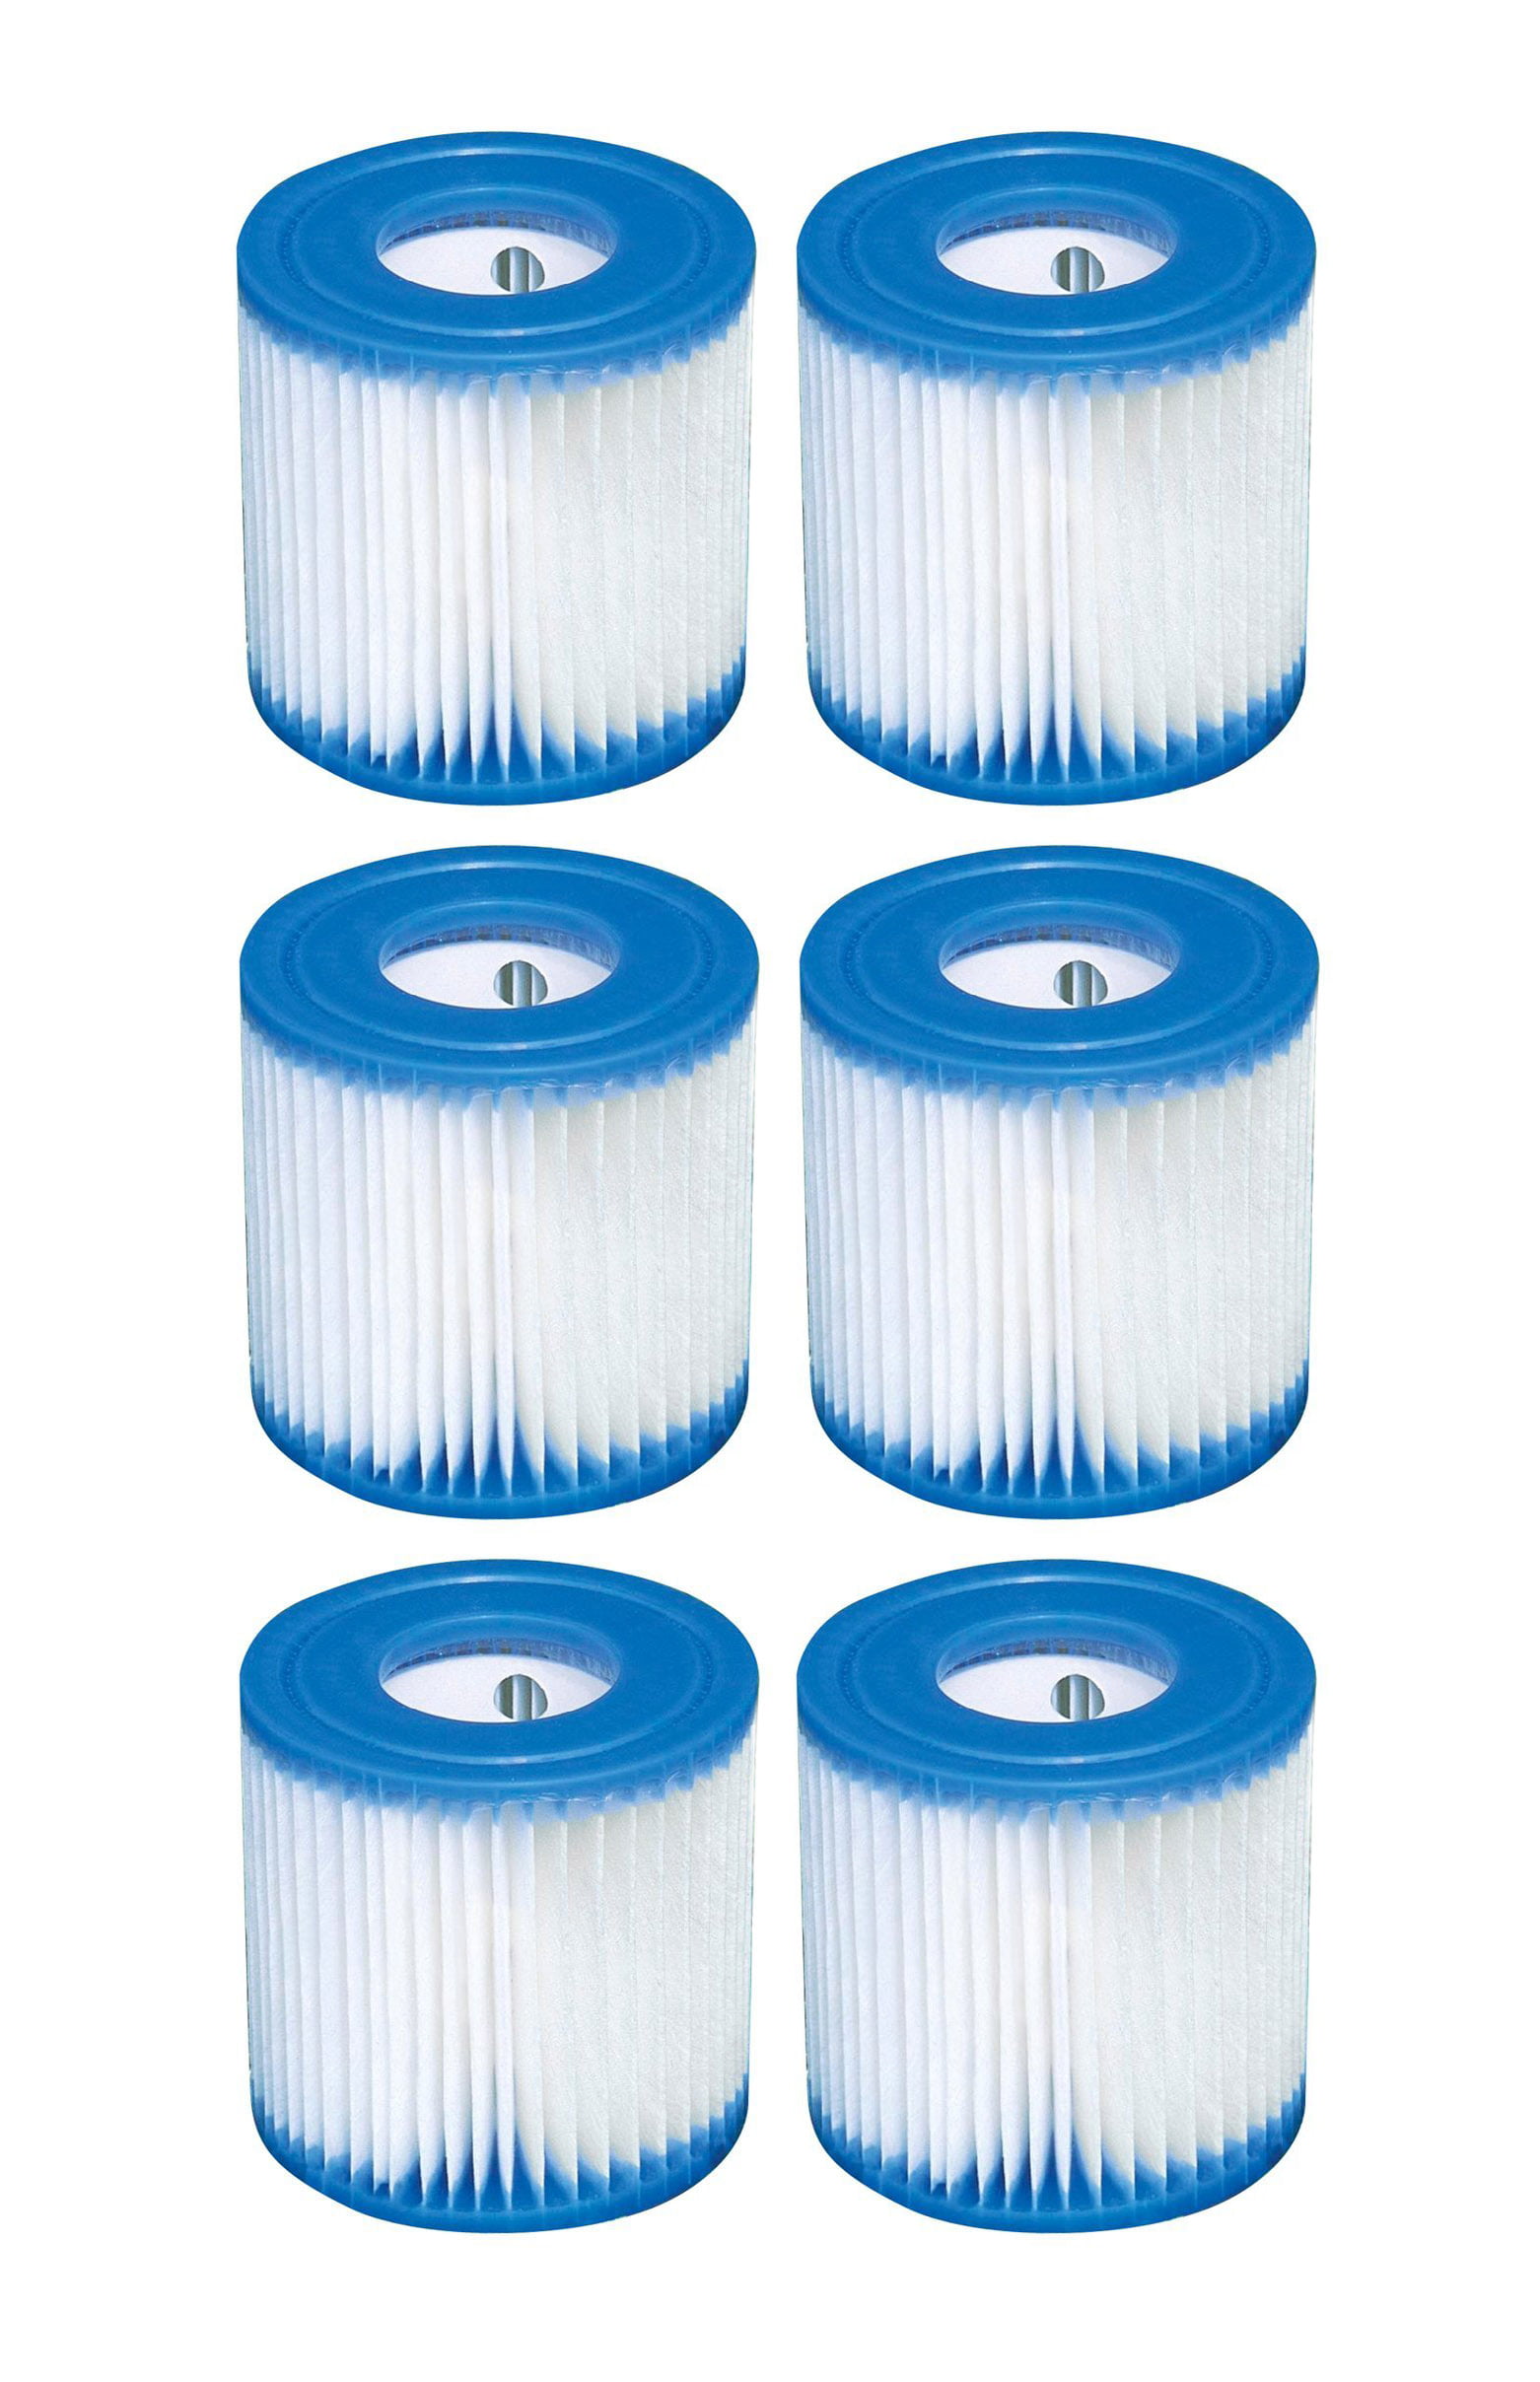 Set of 12 Intex Swimming Pool Filter Cartridges Type H for Pumps 28601 28602 